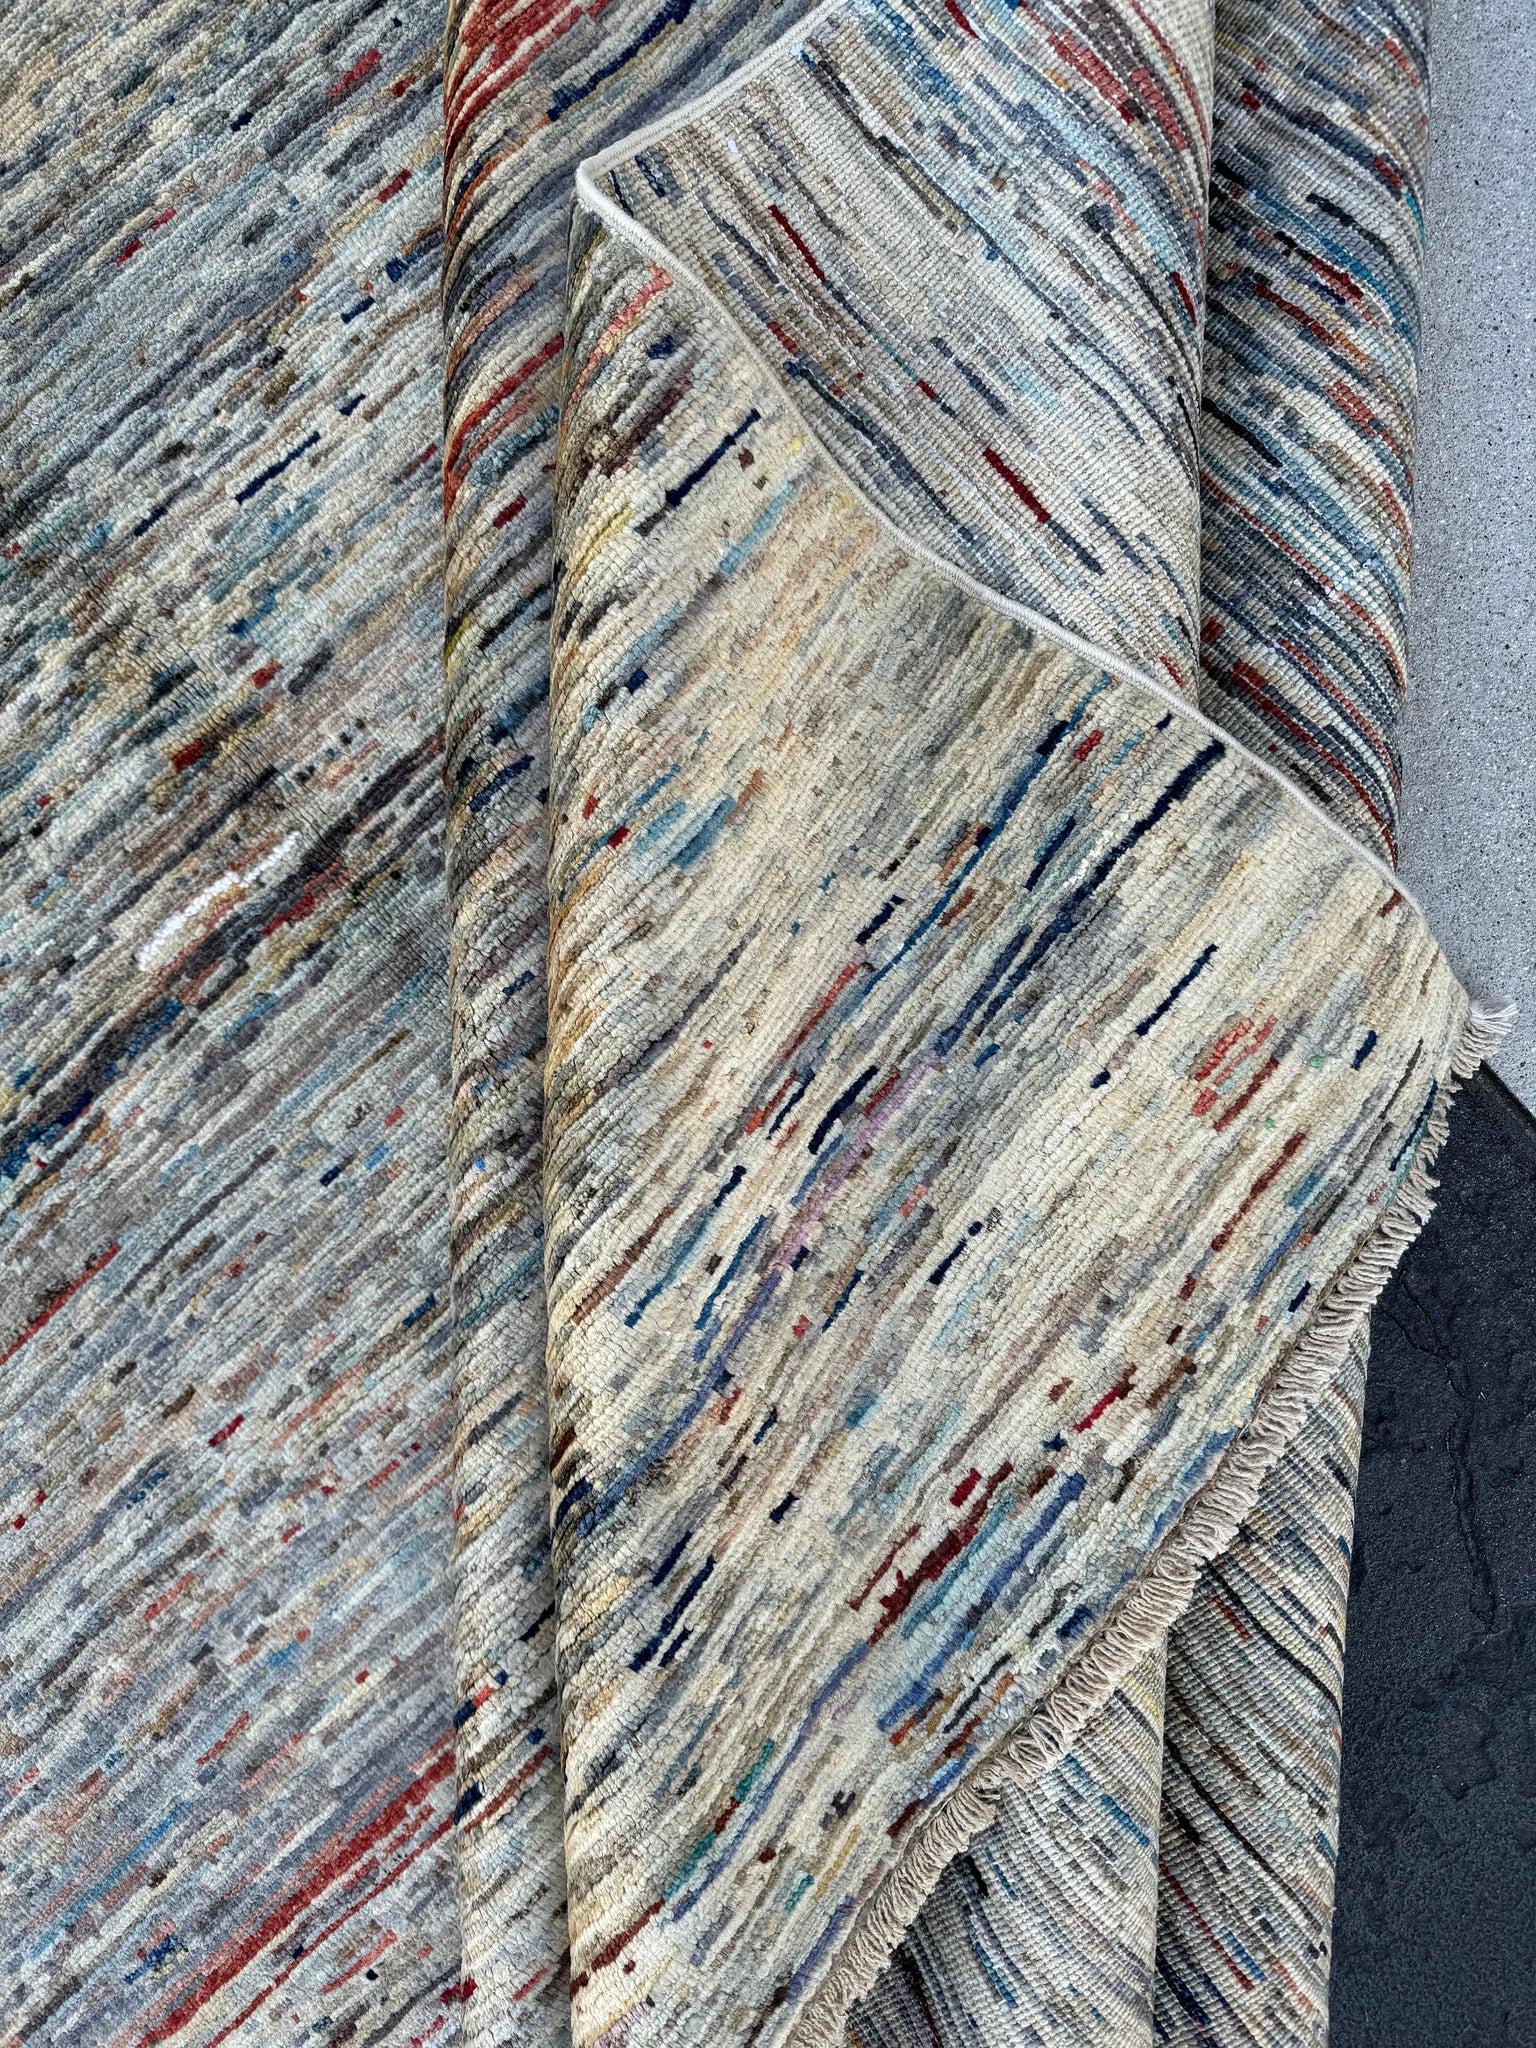 8x9 (240x270) Hand Knotted Handmade Afghan Rug | Cream White Brick Red Denim Blue Cornsilk Black Charcoal Grey | Modern Striped Wool